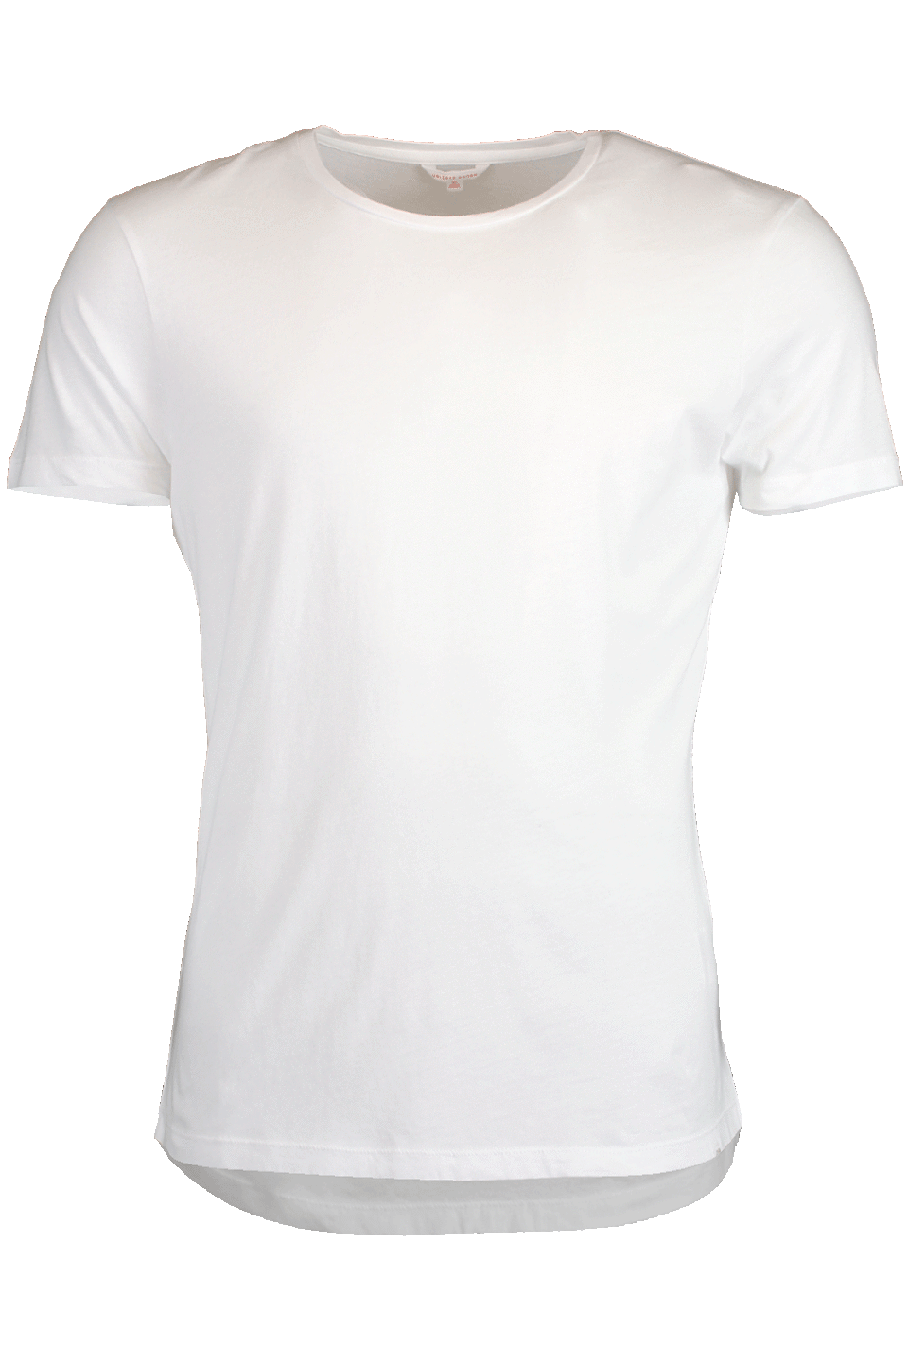 ORLEBAR BROWN-OB-T White T-Shirt-